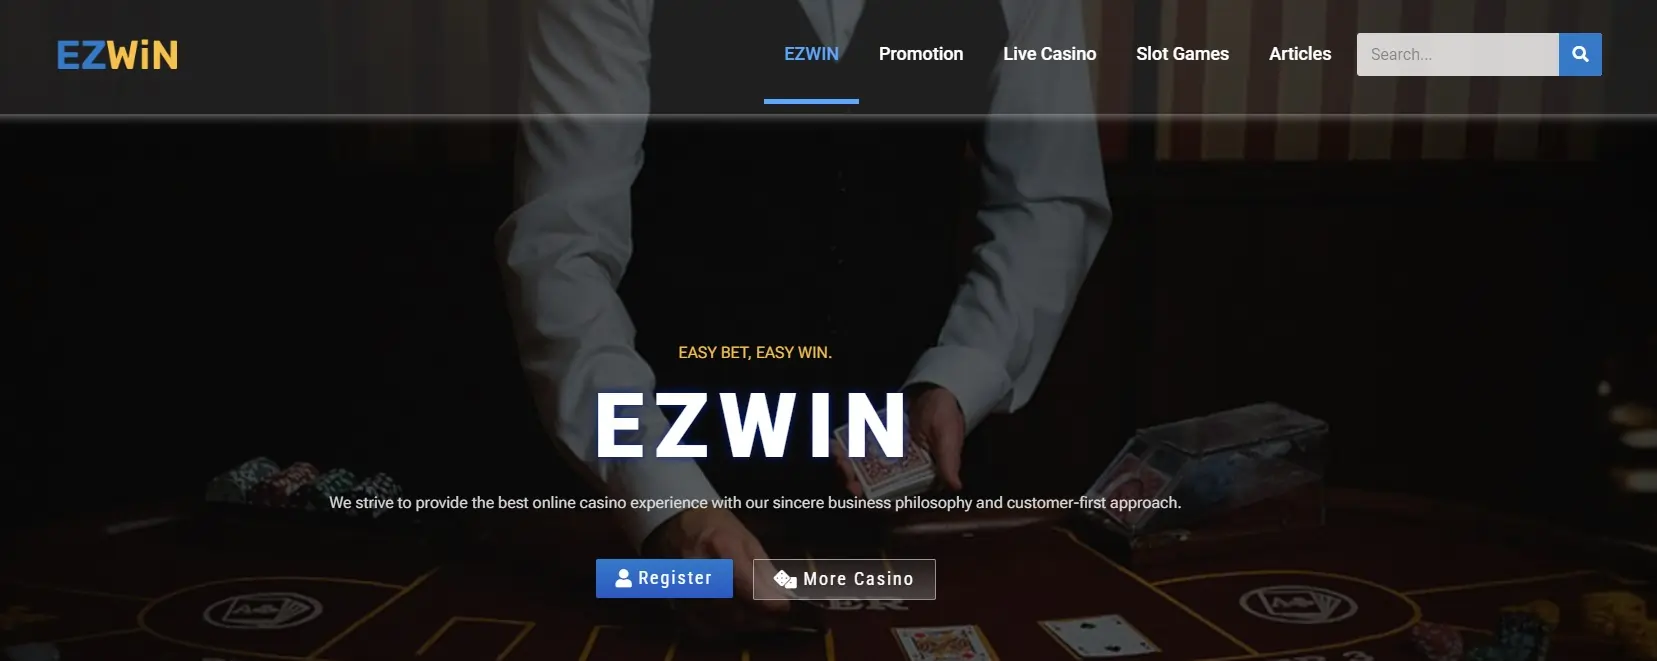 EZWIN Online Casino Login